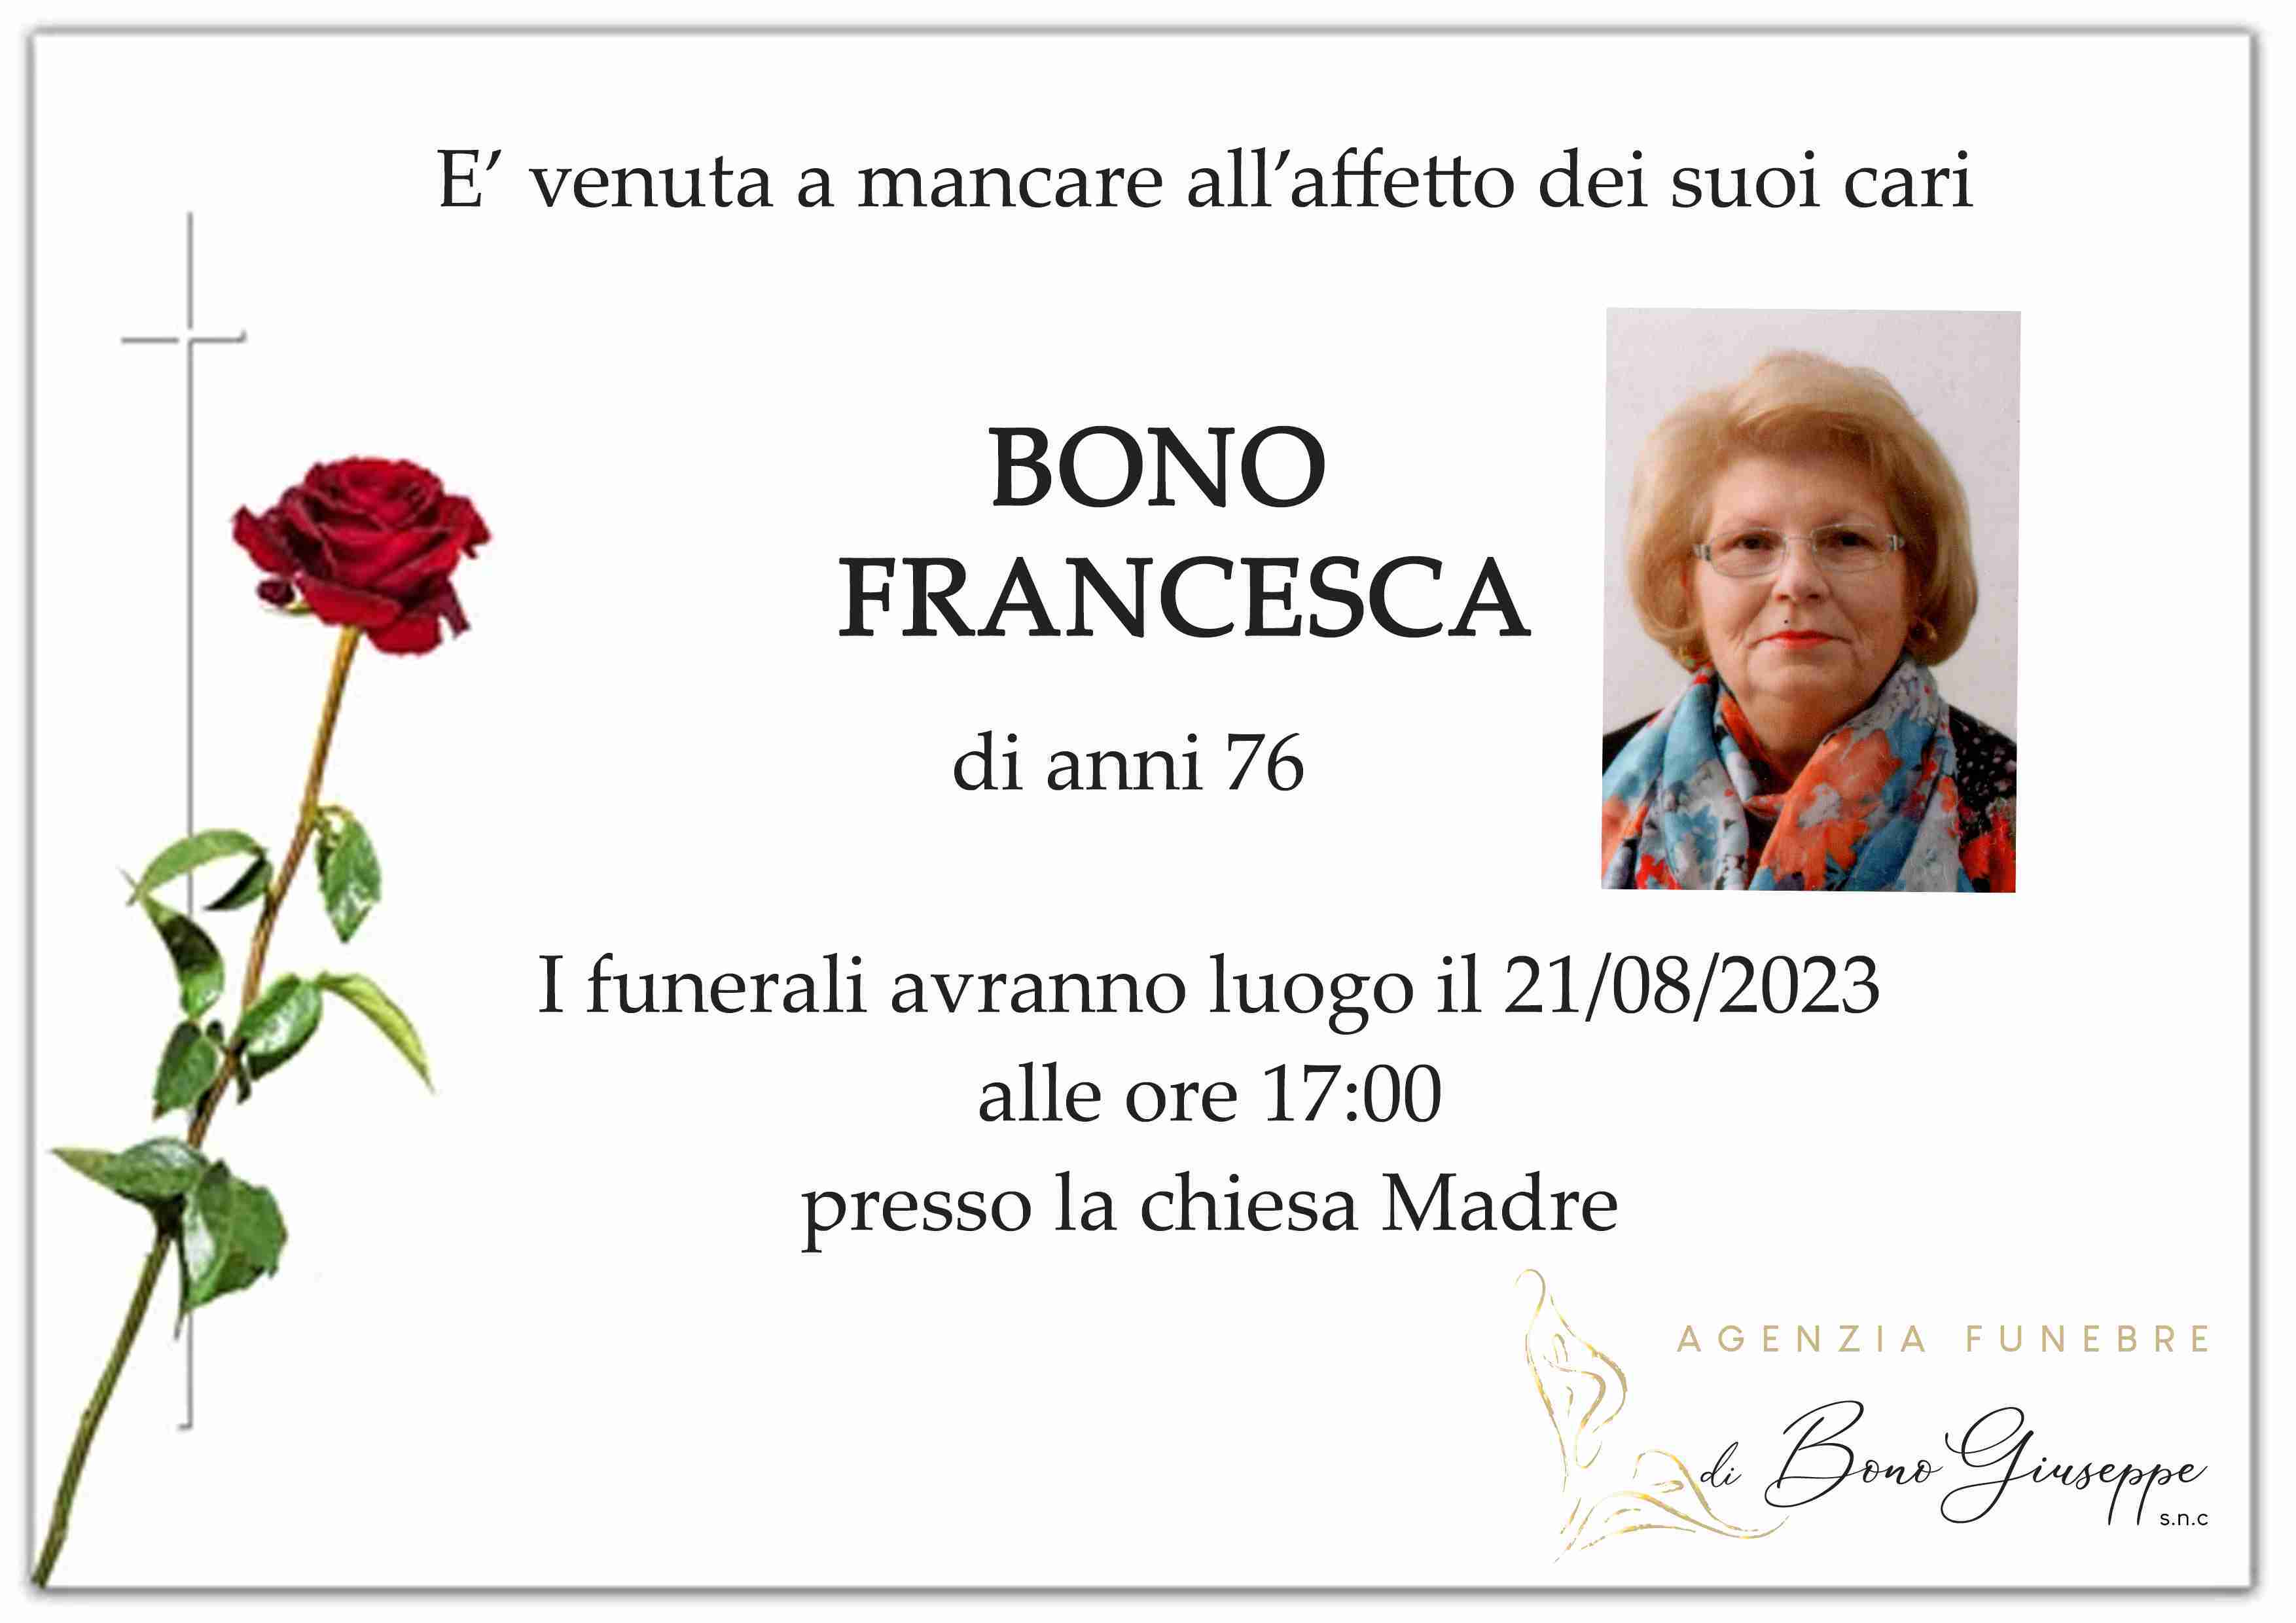 Francesca Bono